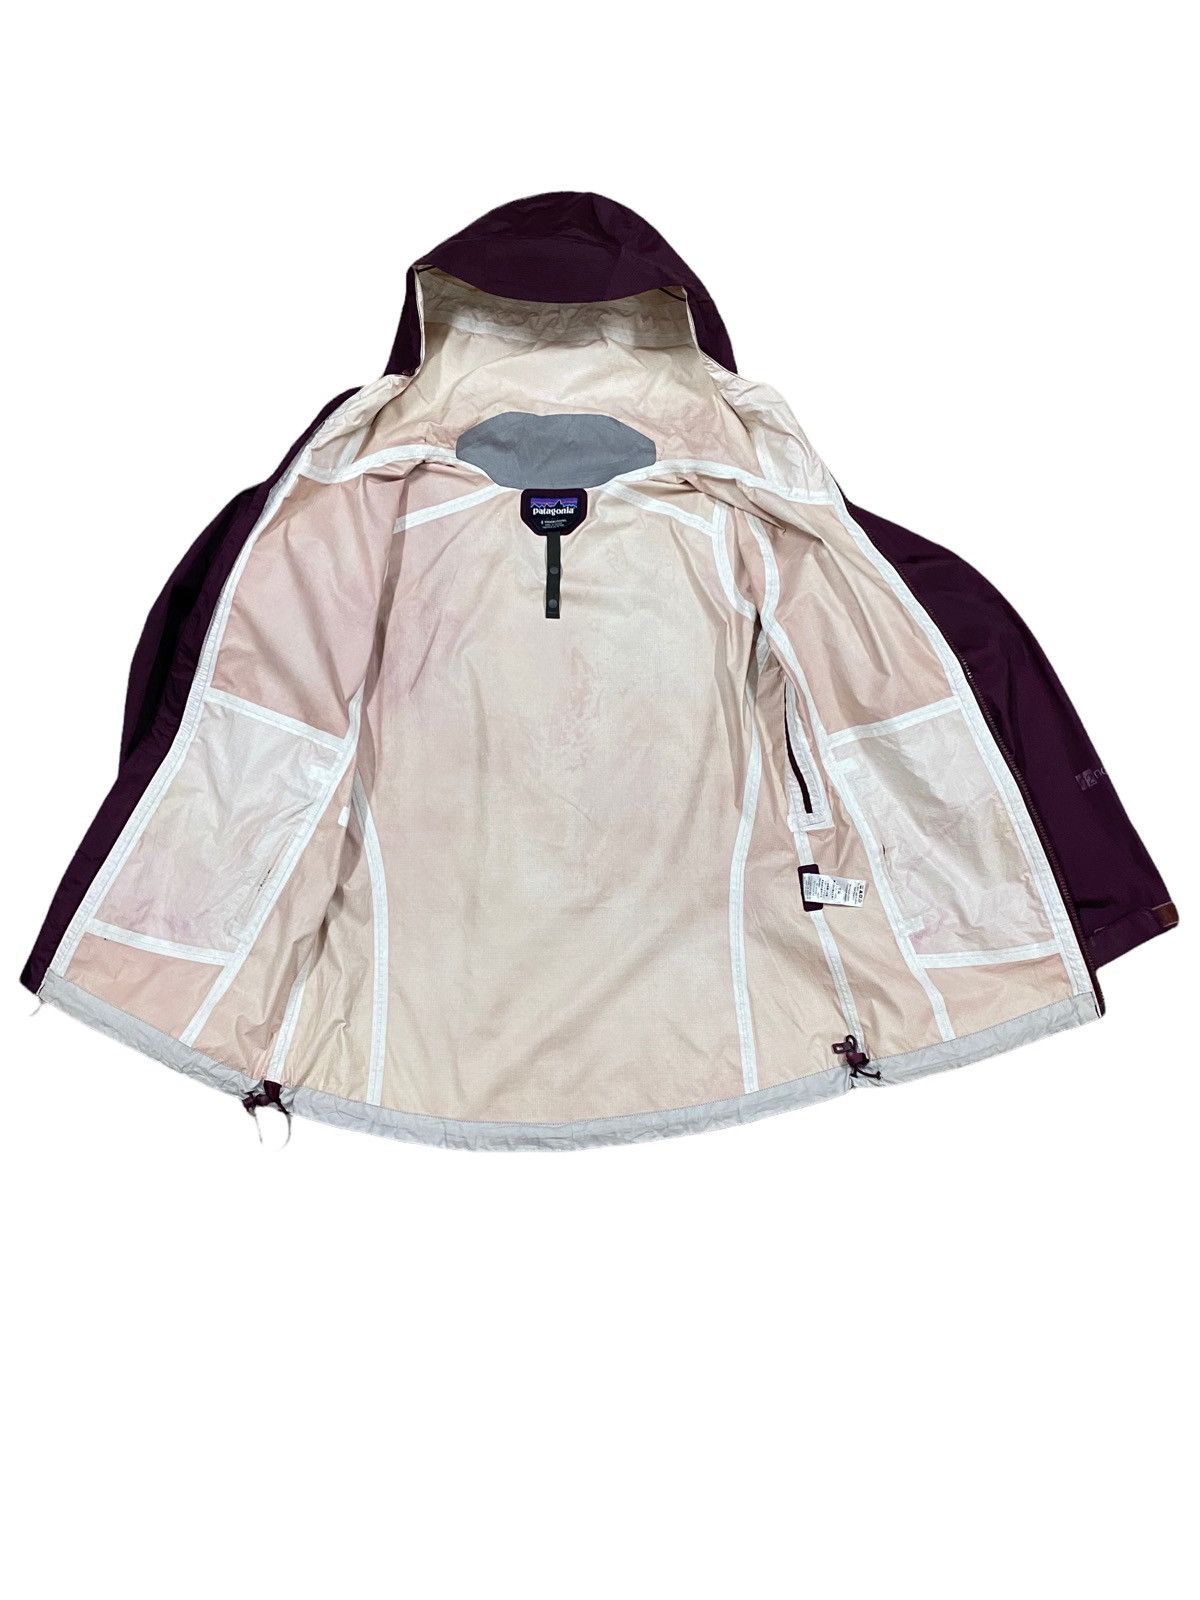 Patagonia H2No Raicoat Goretex Jacket Arcteryx Gamma Style - 13